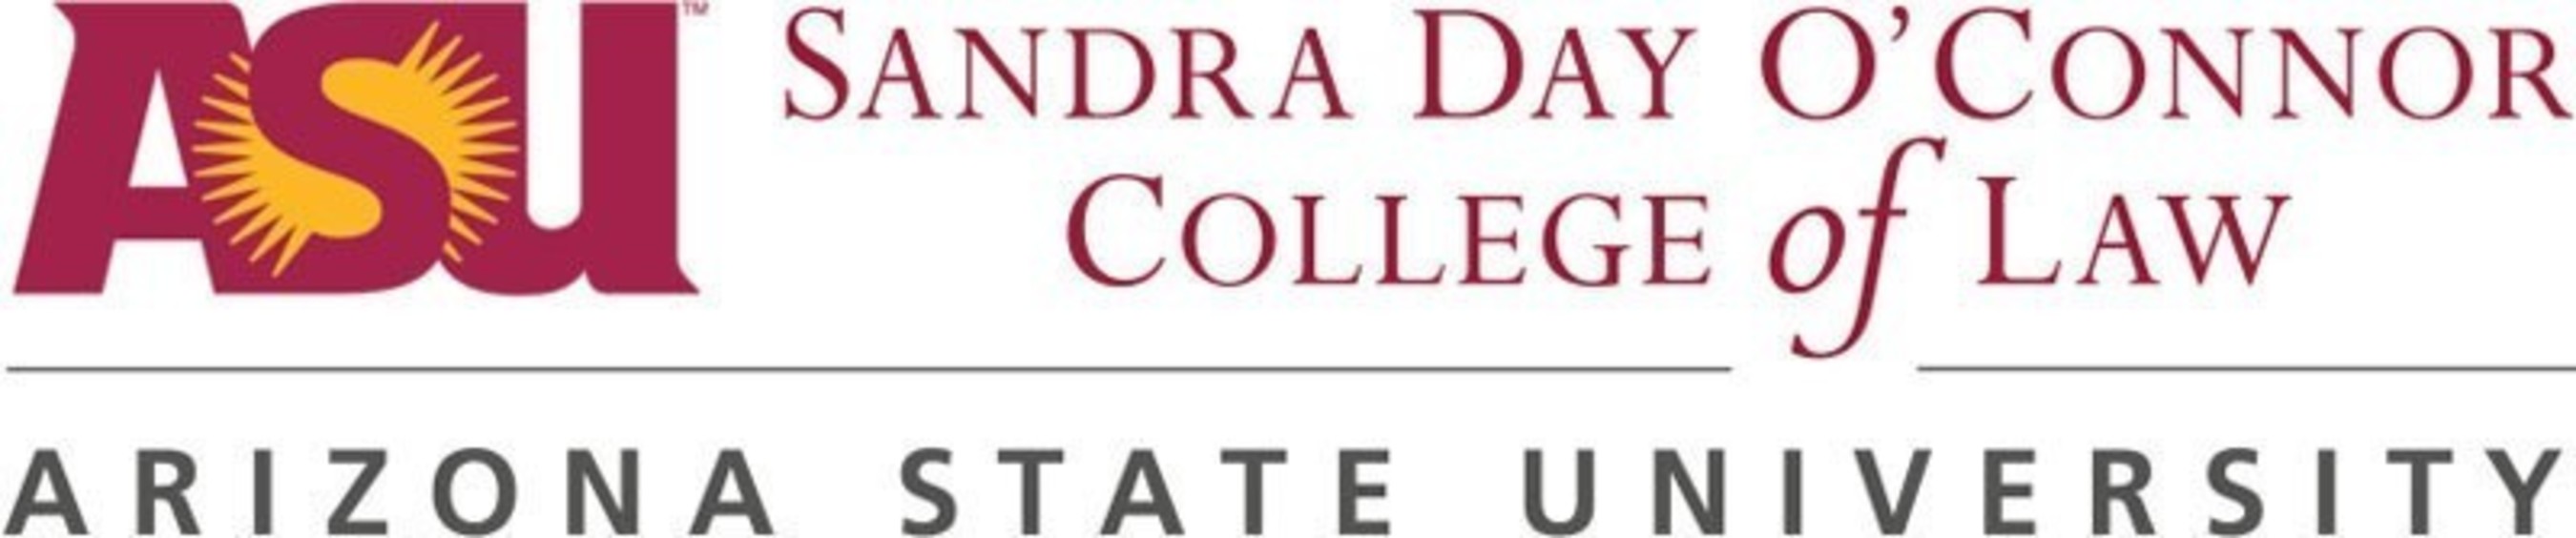 Arizona State University Sandra Day O'Connor College of Law.